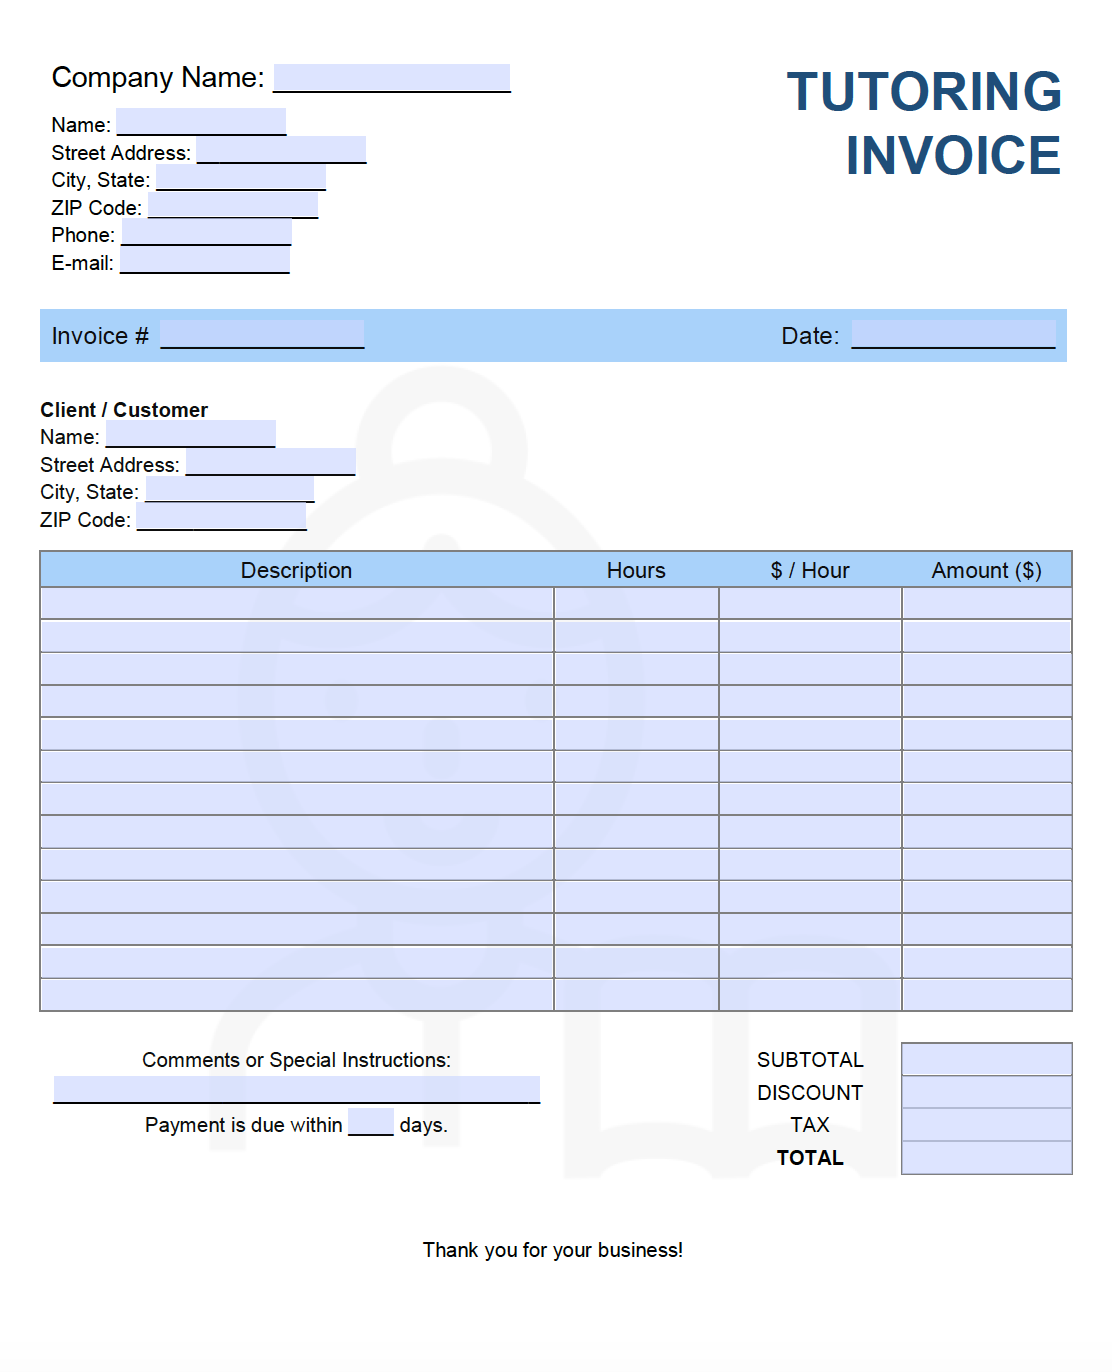 Billing Invoice Template for Online Tutors and Educators